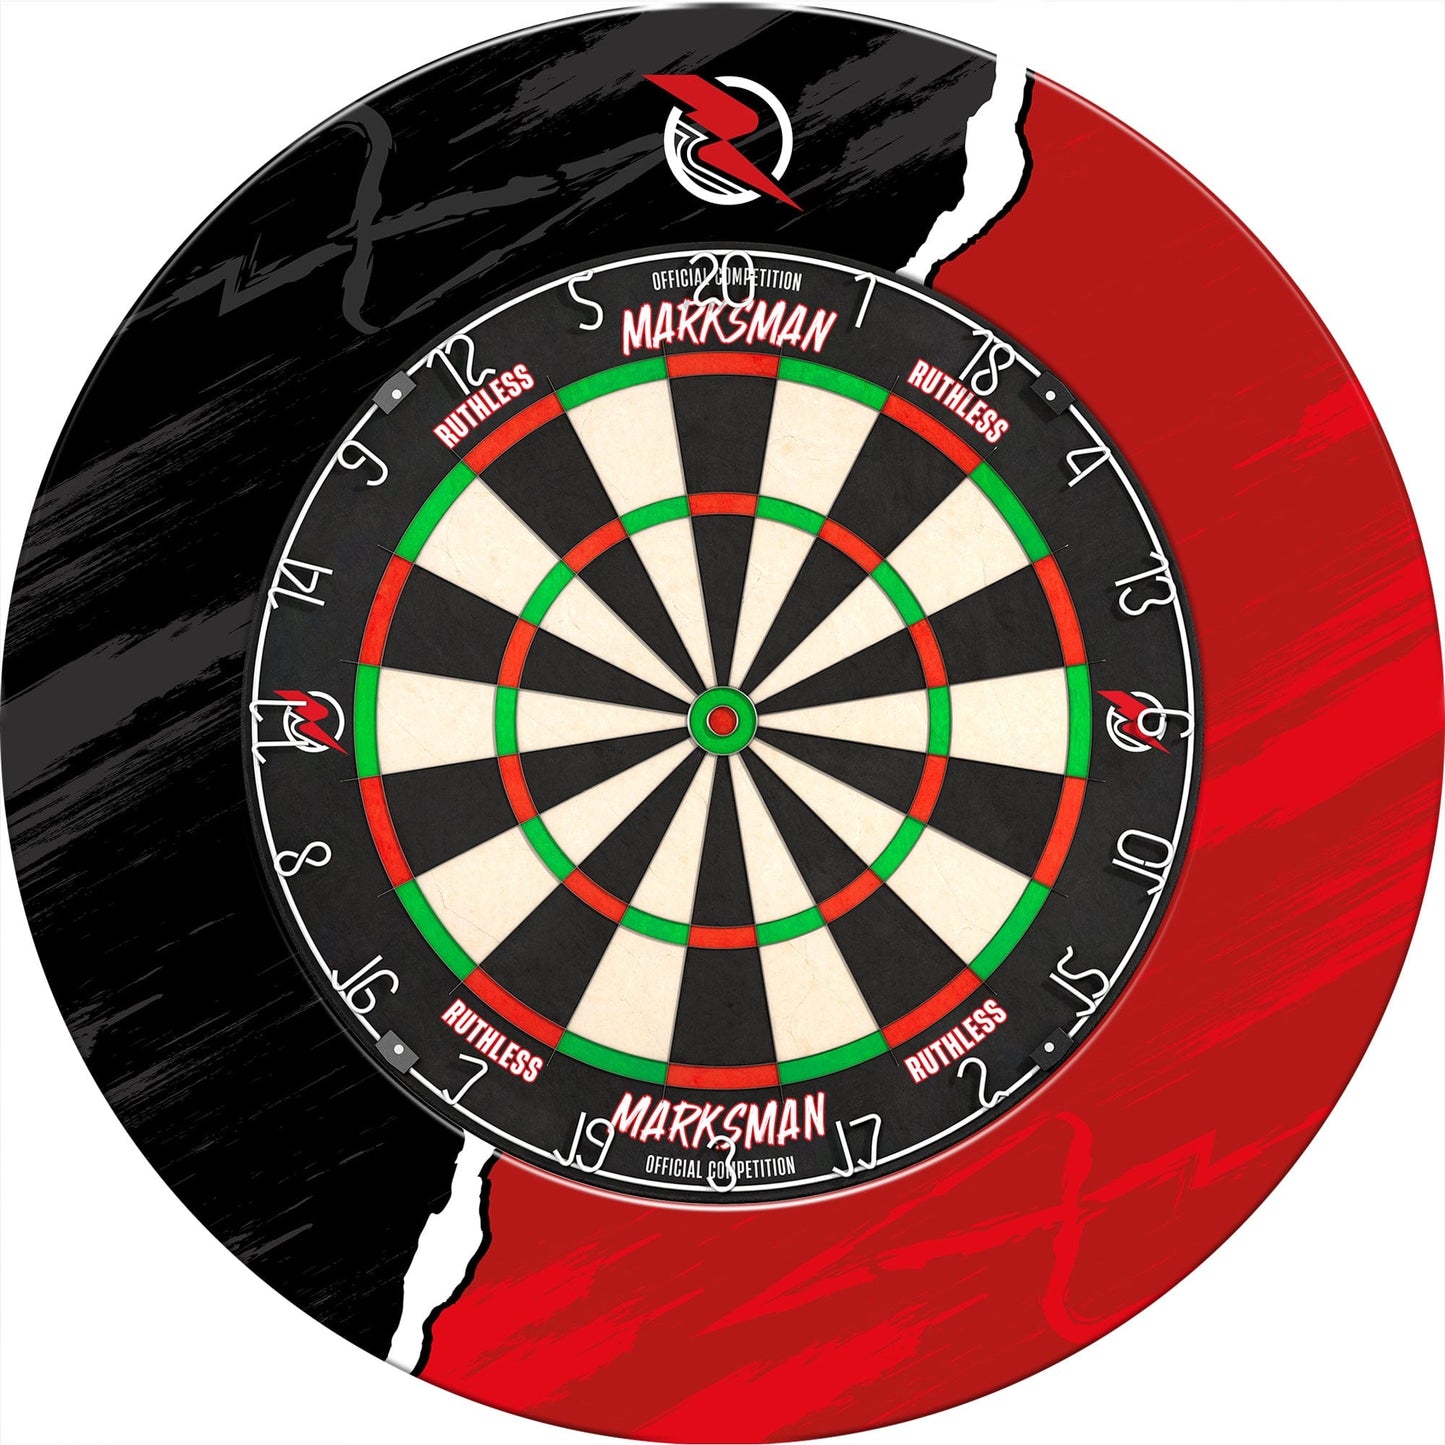 Ruthless Dartboard Surround - Professional - RipTorn - Black & Red